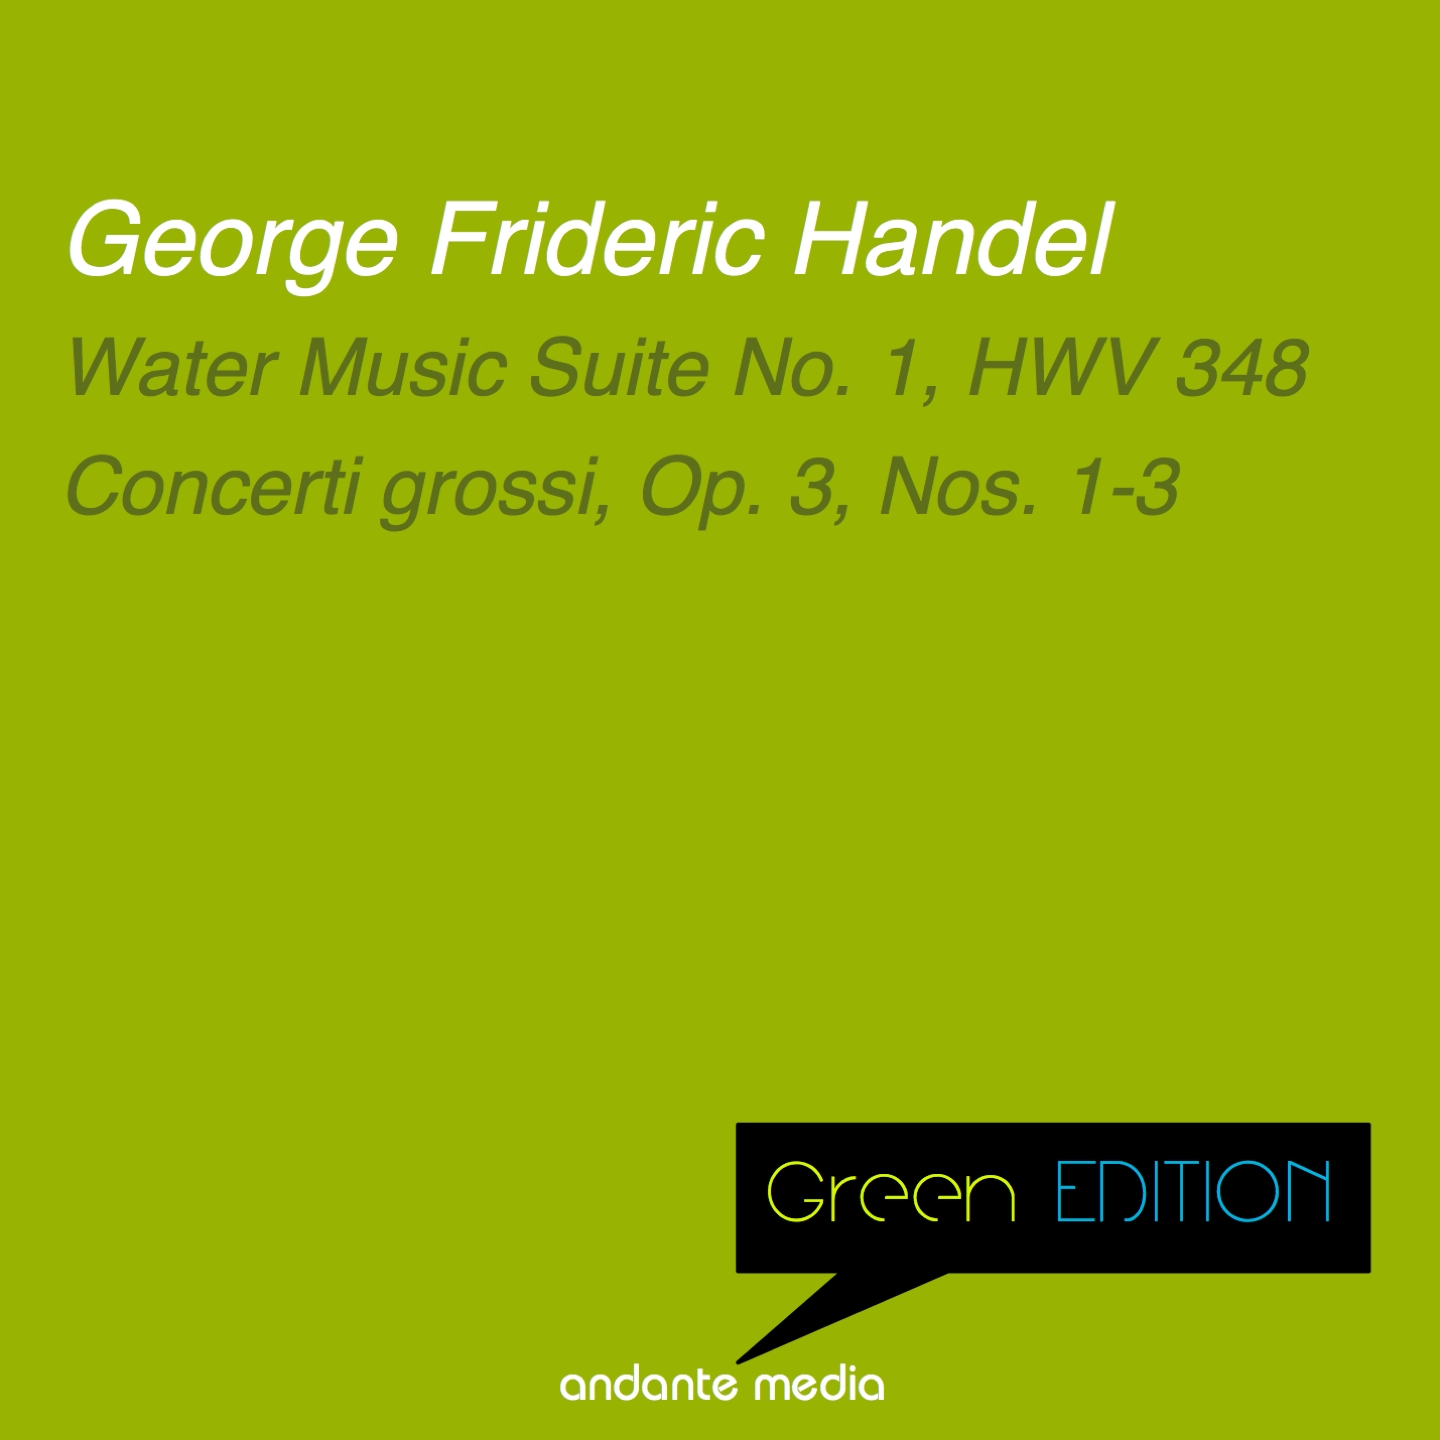 Green Edition - Handel: Water Music Suite No. 1, HWV 348 & Concerti grossi, Op. 3, Nos. 1-3